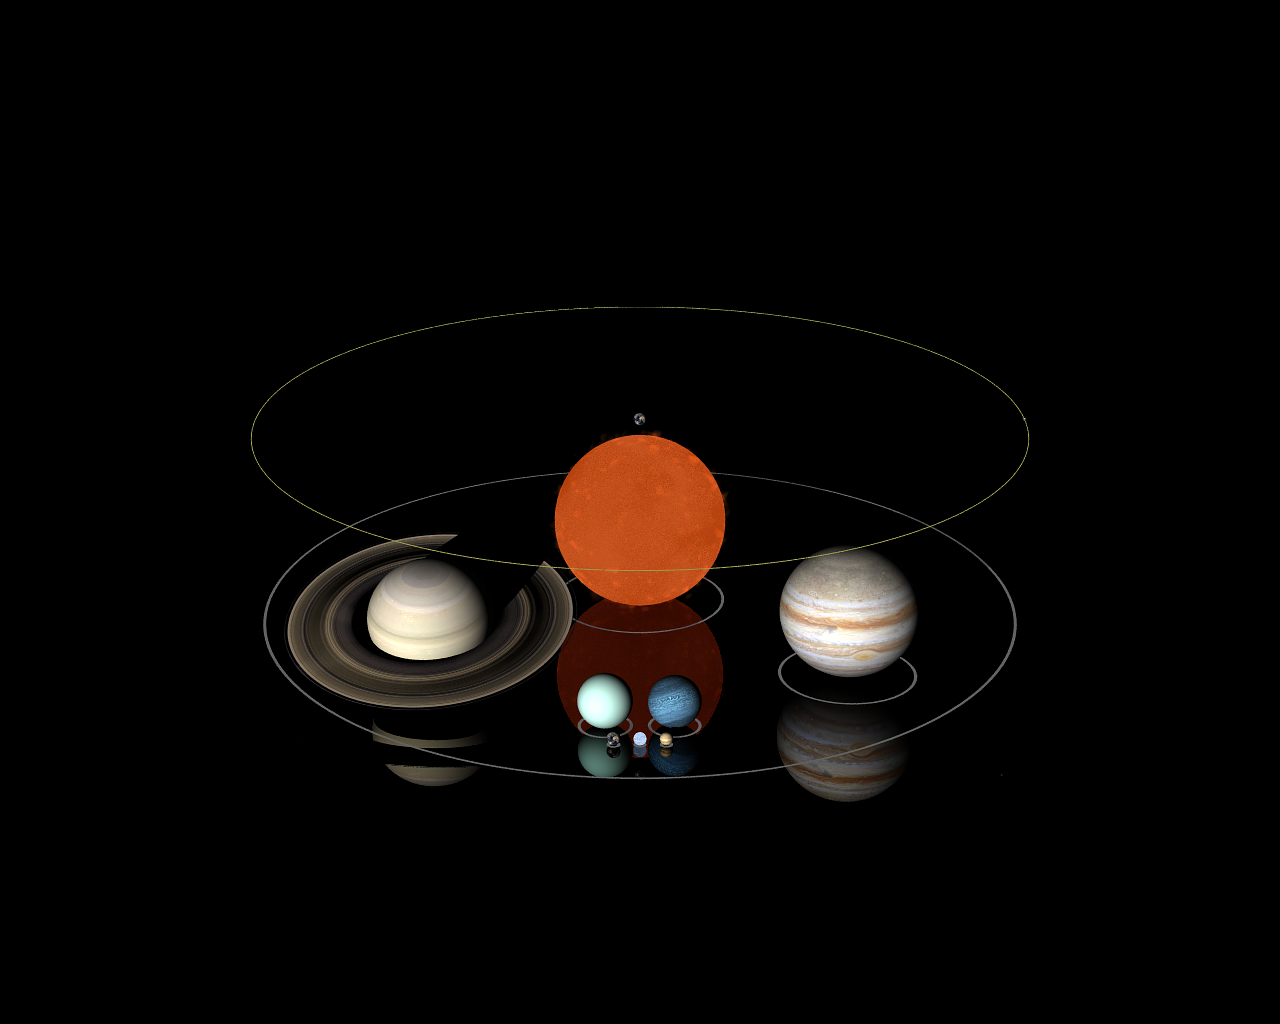 planet planetary comparison size comparison free photo